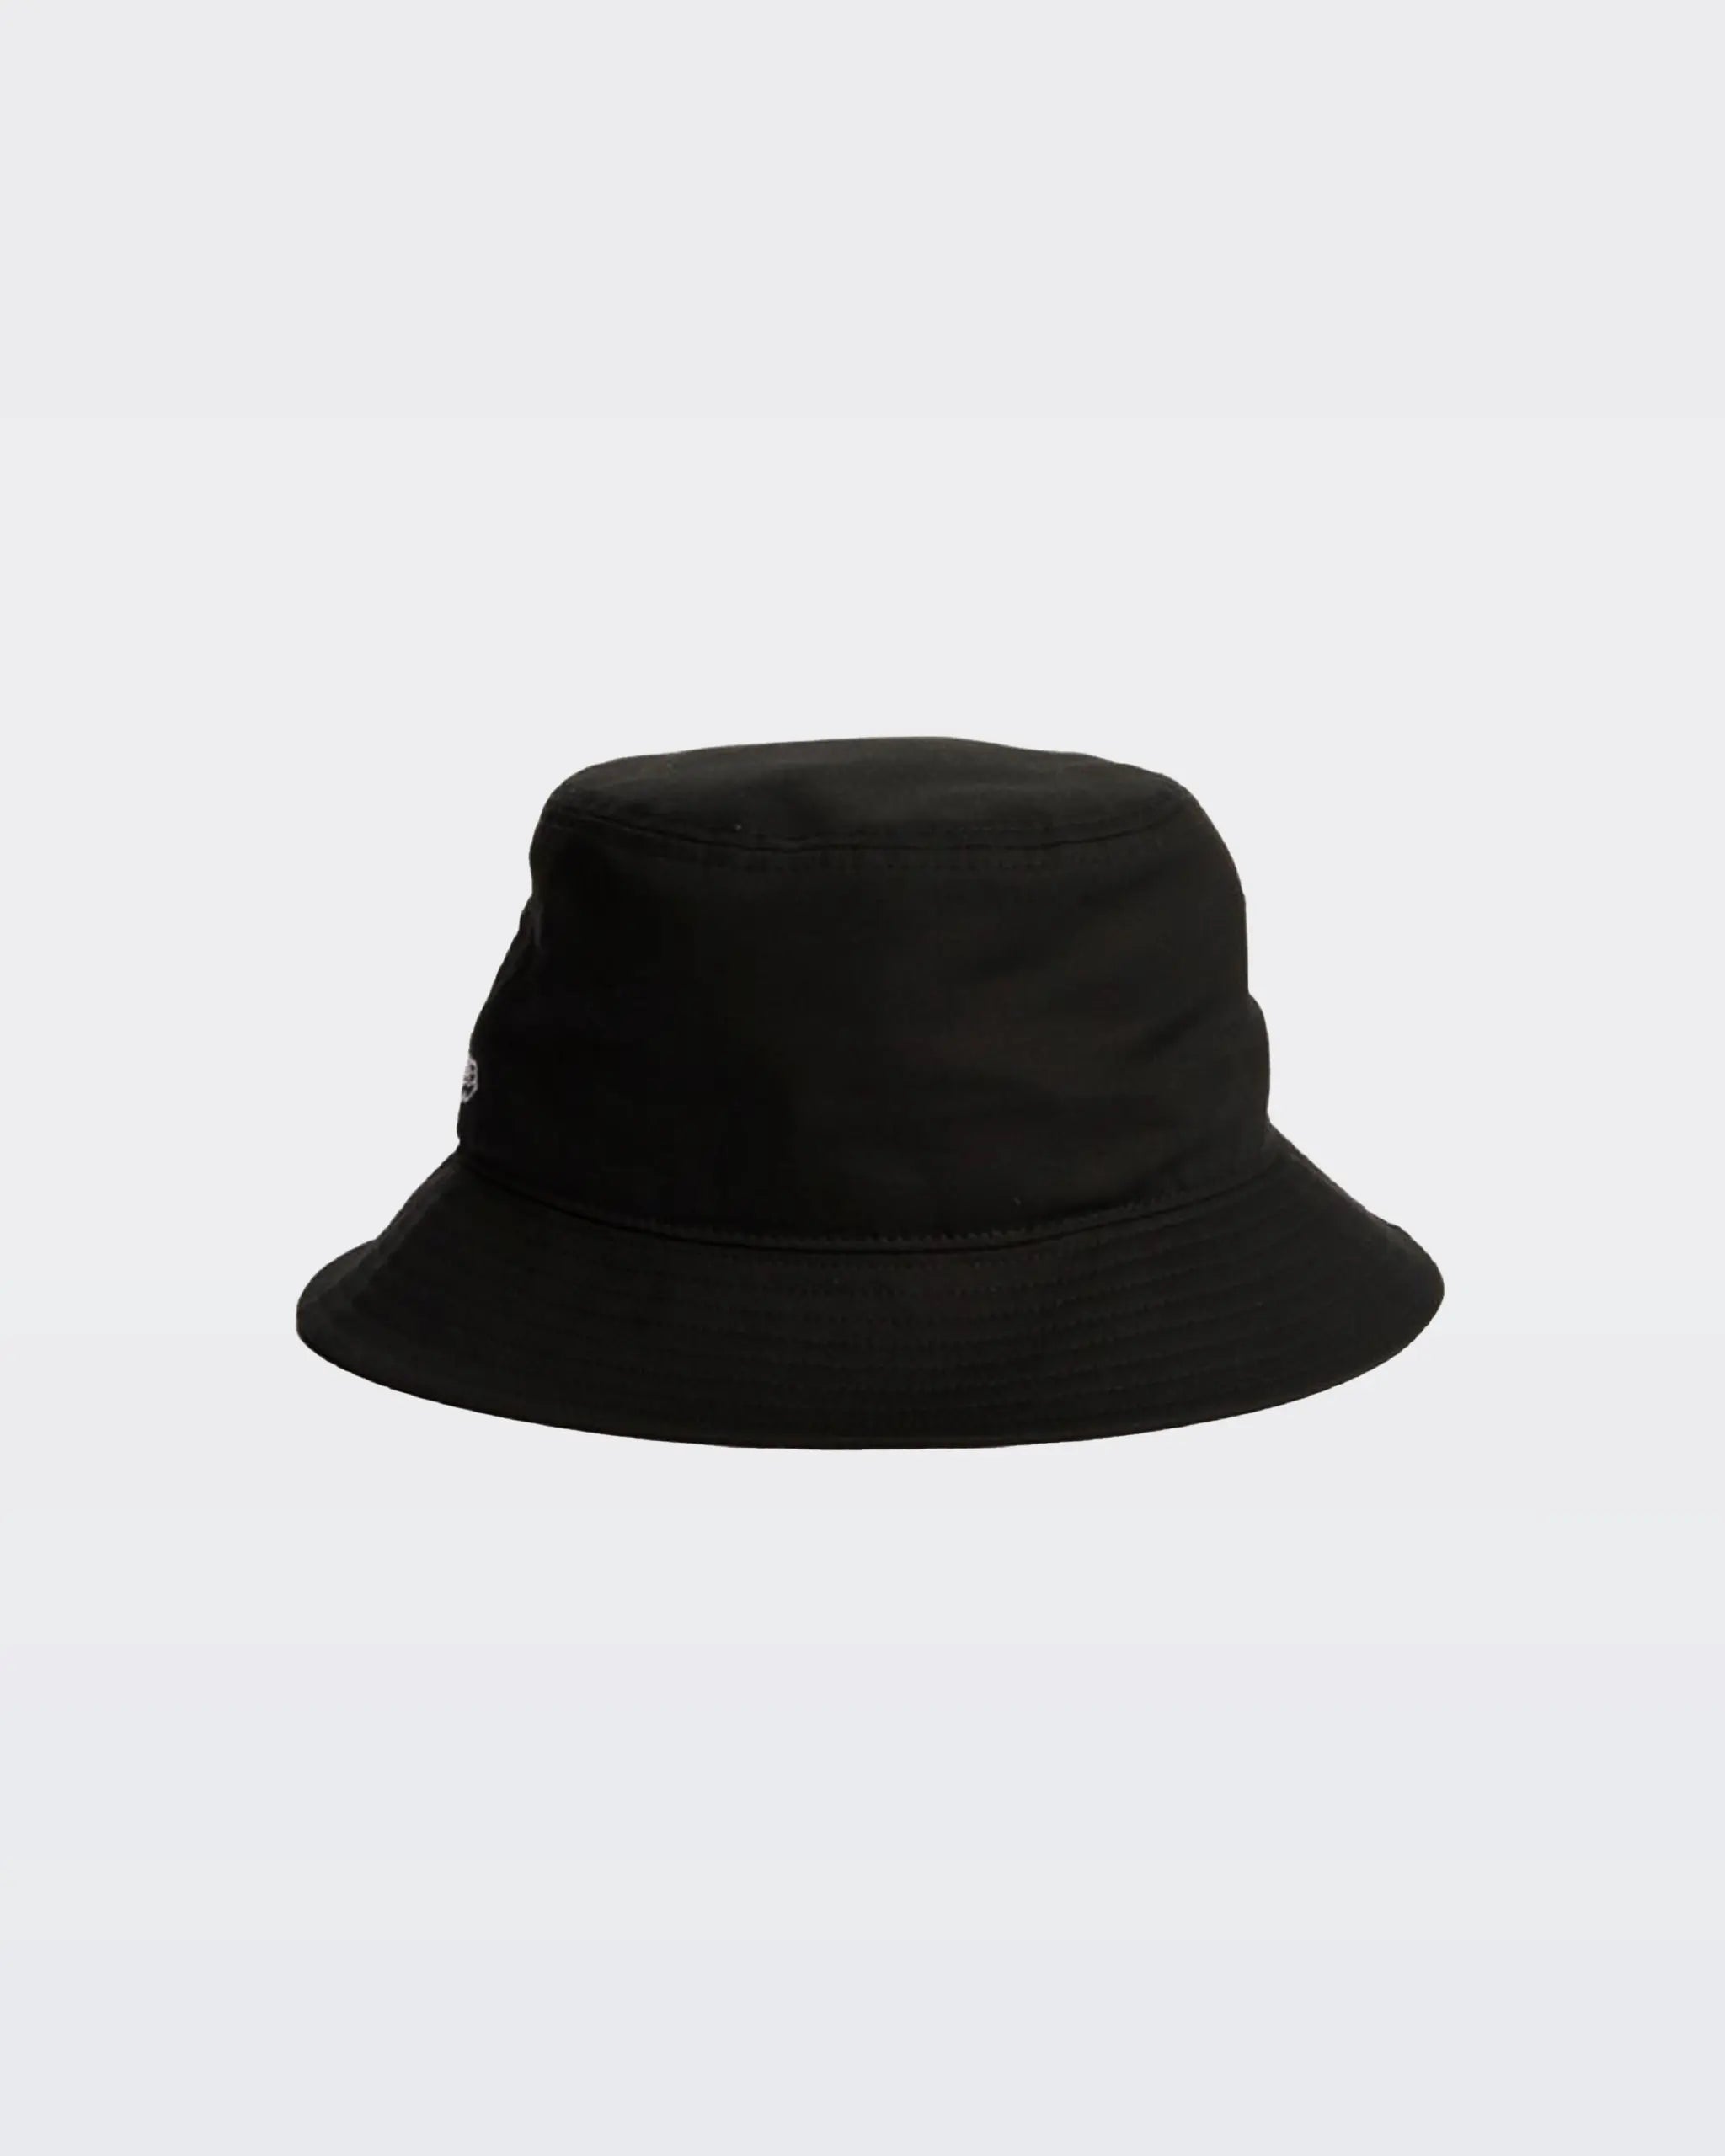 Newcastle United New Era Monochrome Bucket Hat